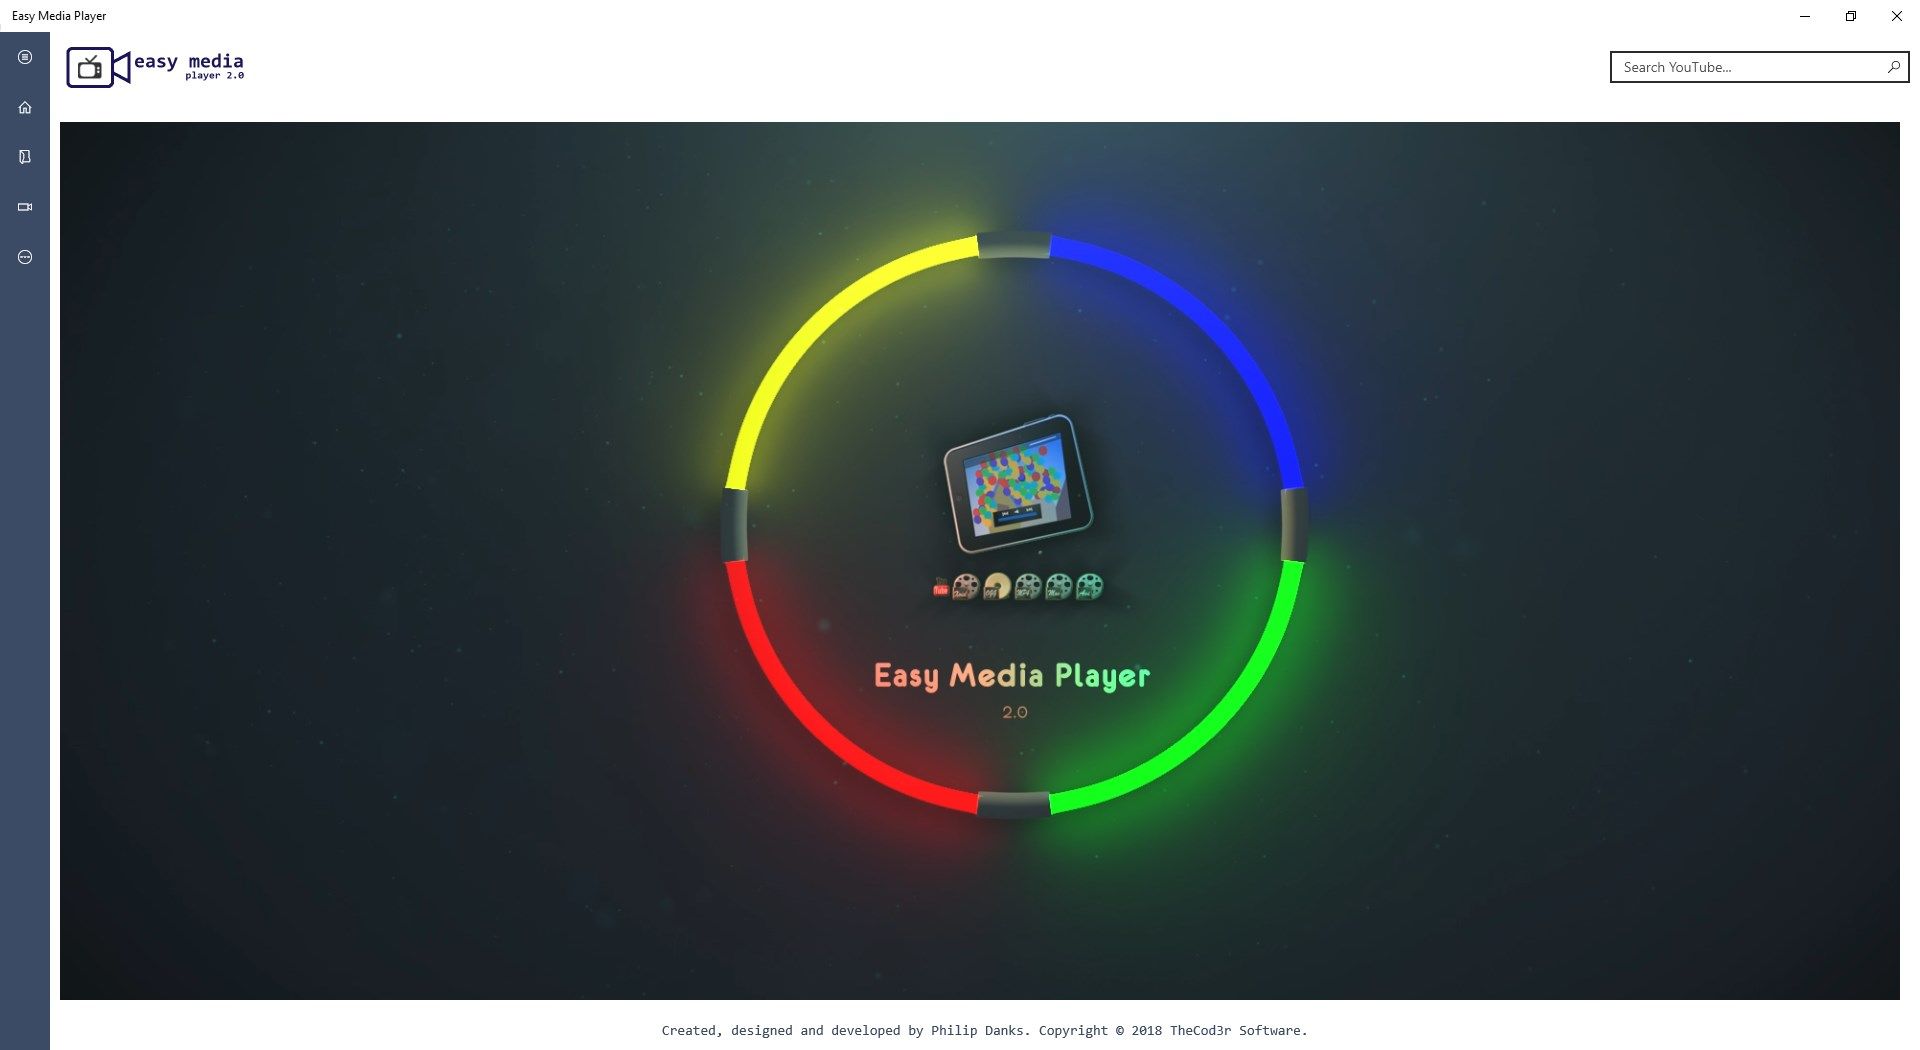 Easy Media Player 2.0